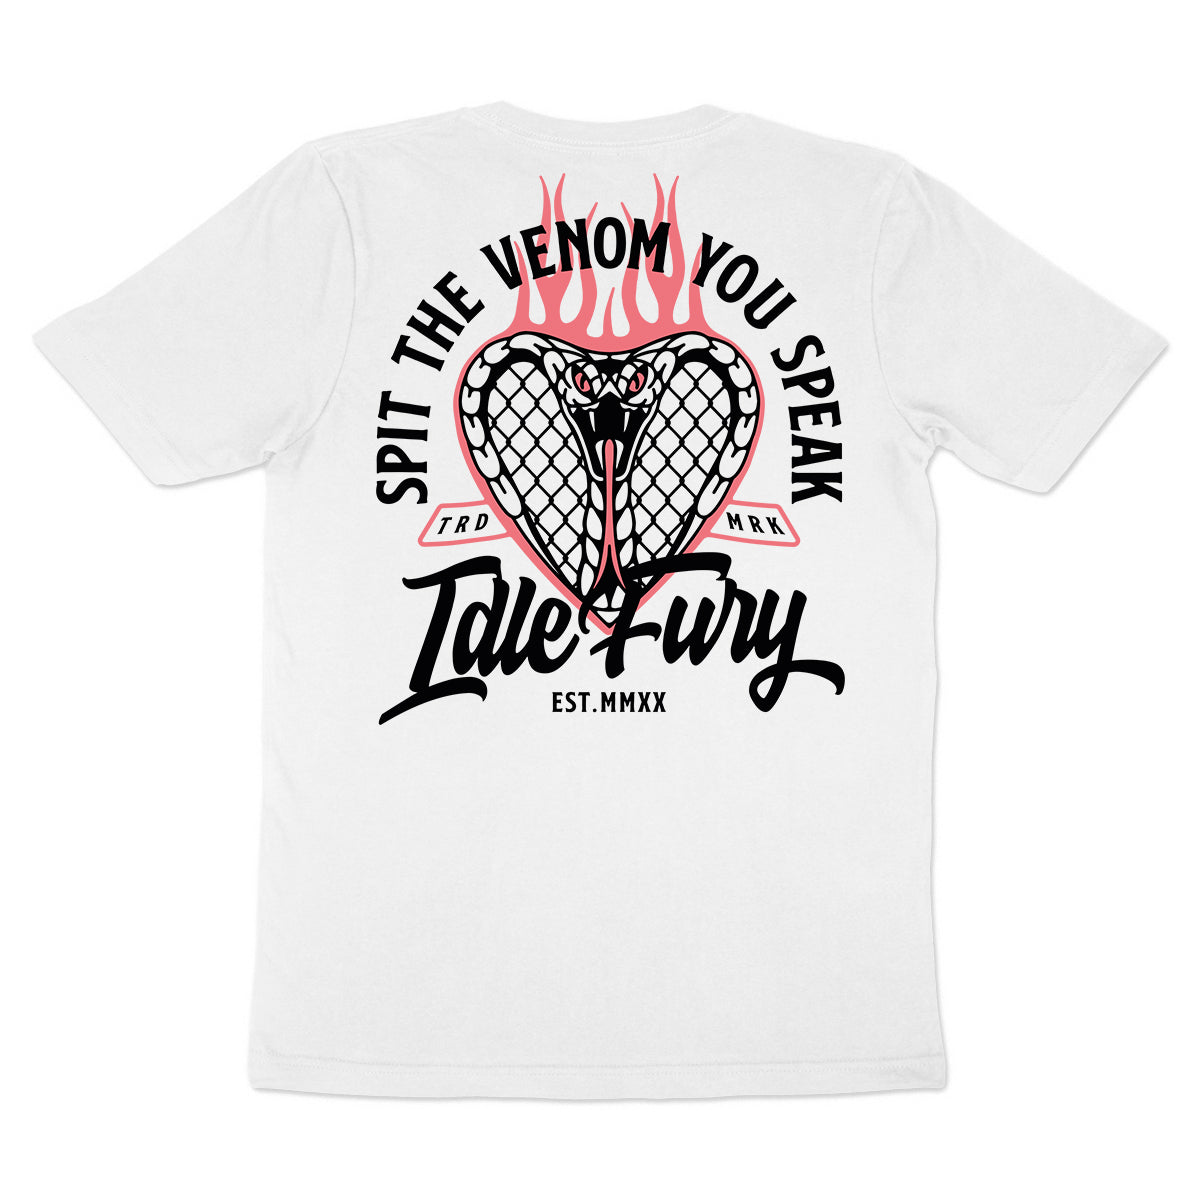 Venom Cobra - White T-Shirt - Front & Back Print - Idle Fury Apparel